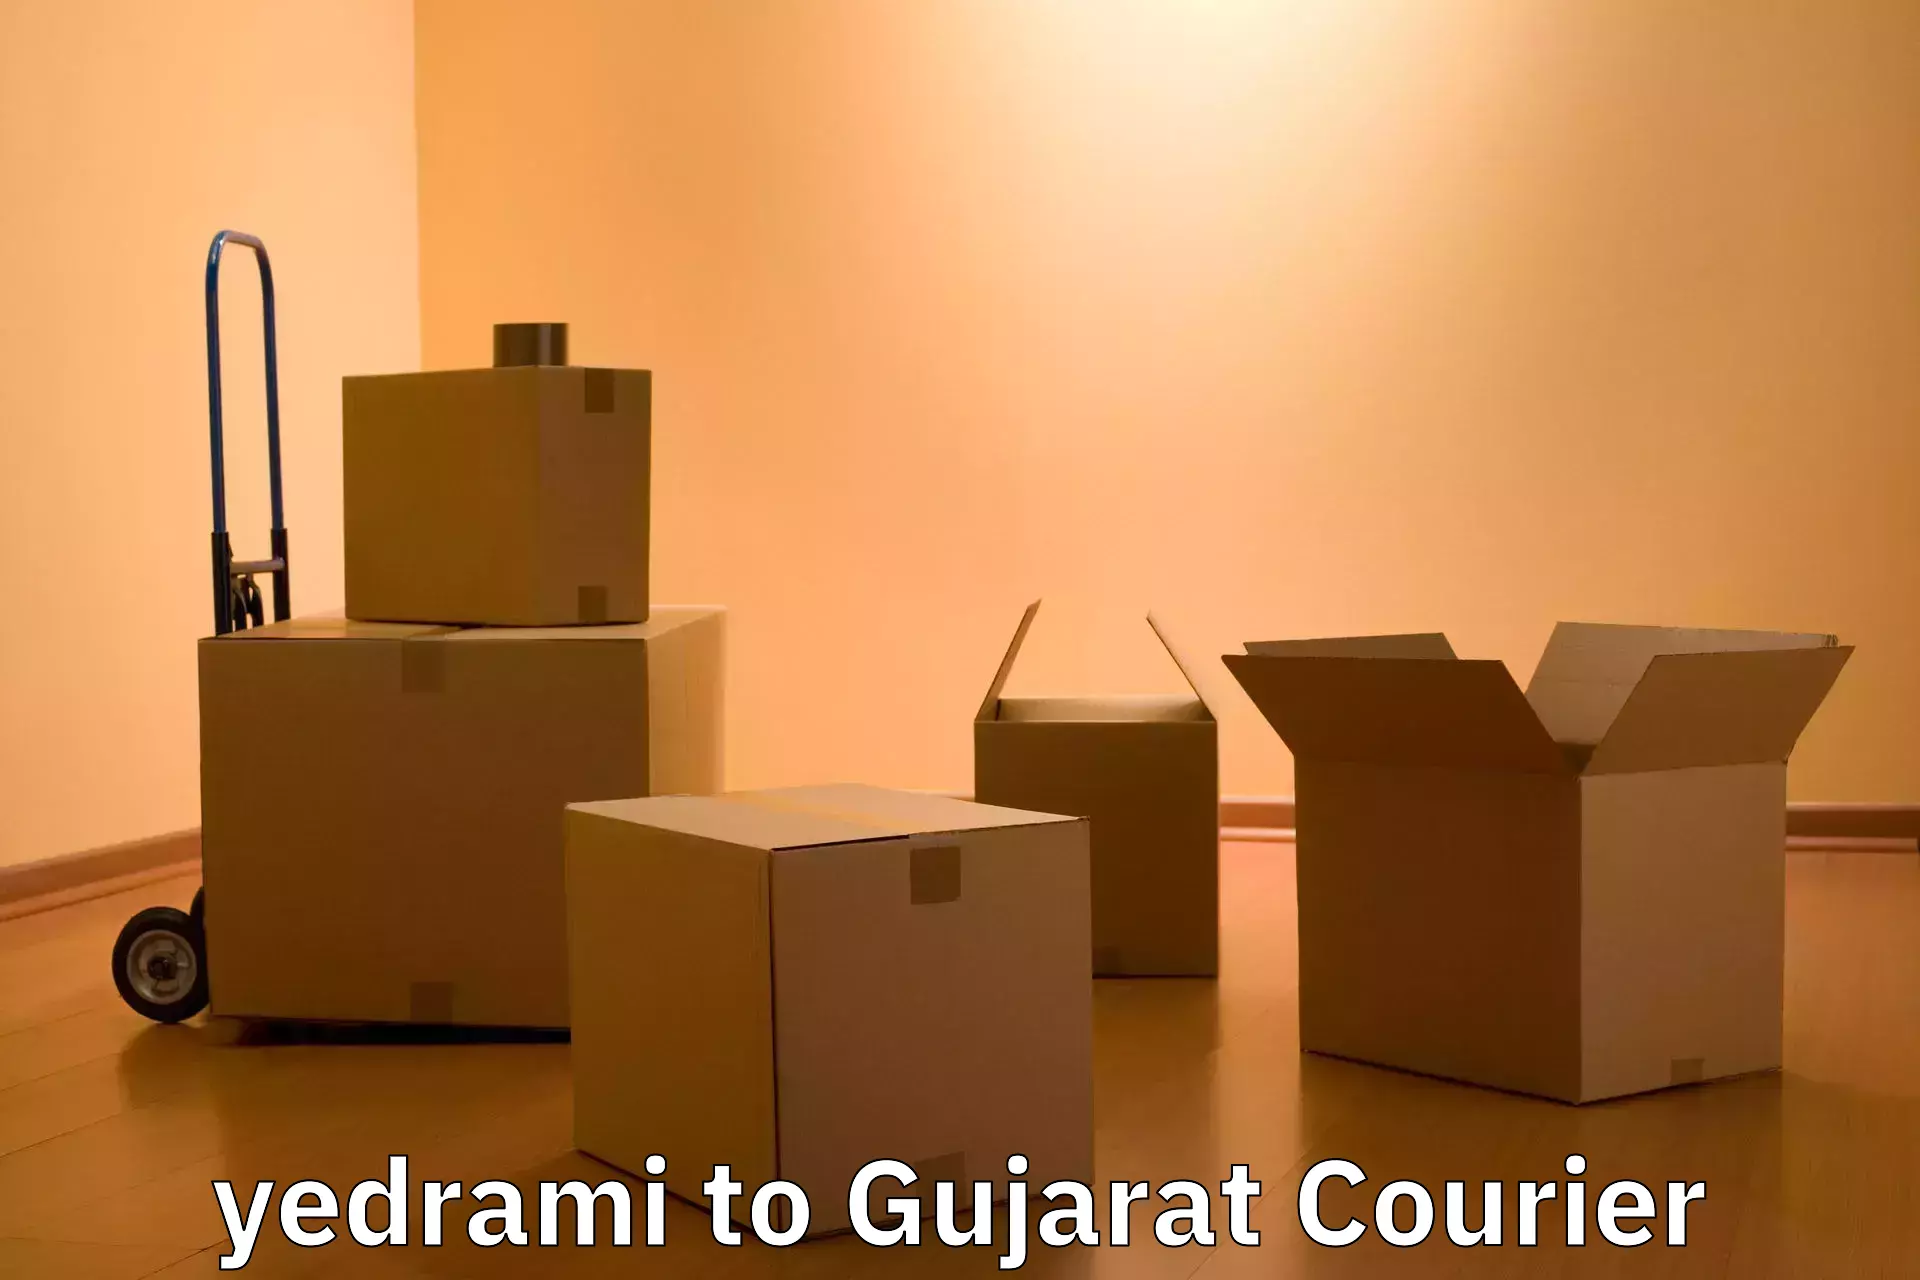 Luggage transport company yedrami to Gujarat